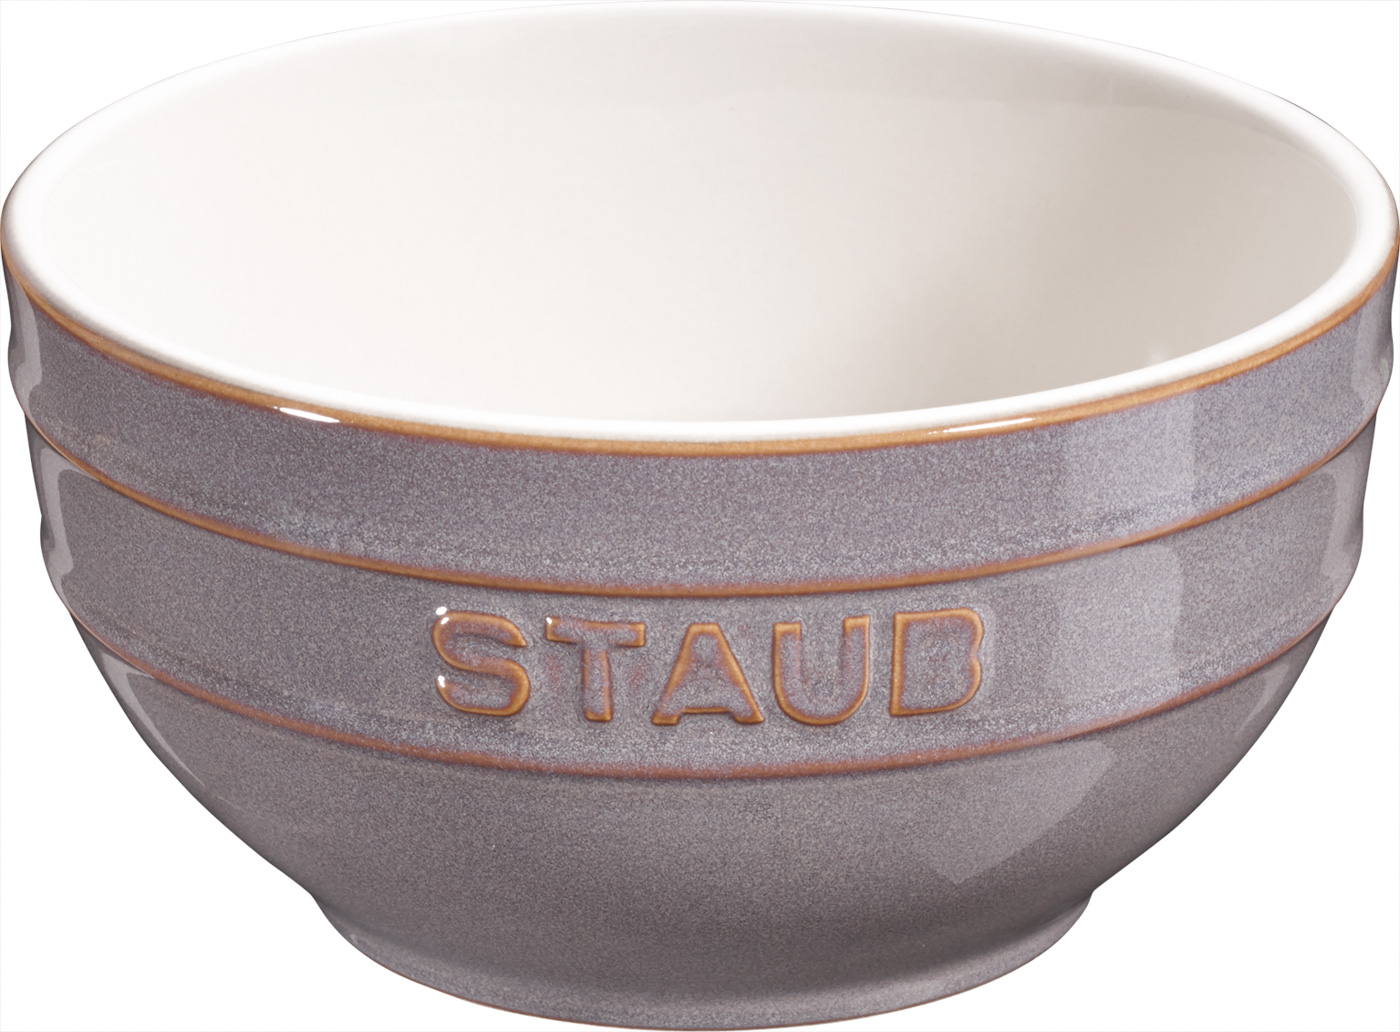 Schüssel, 12 cm, Antik-Grau, Keramik, Serie: Ceramique. Marke: Staub